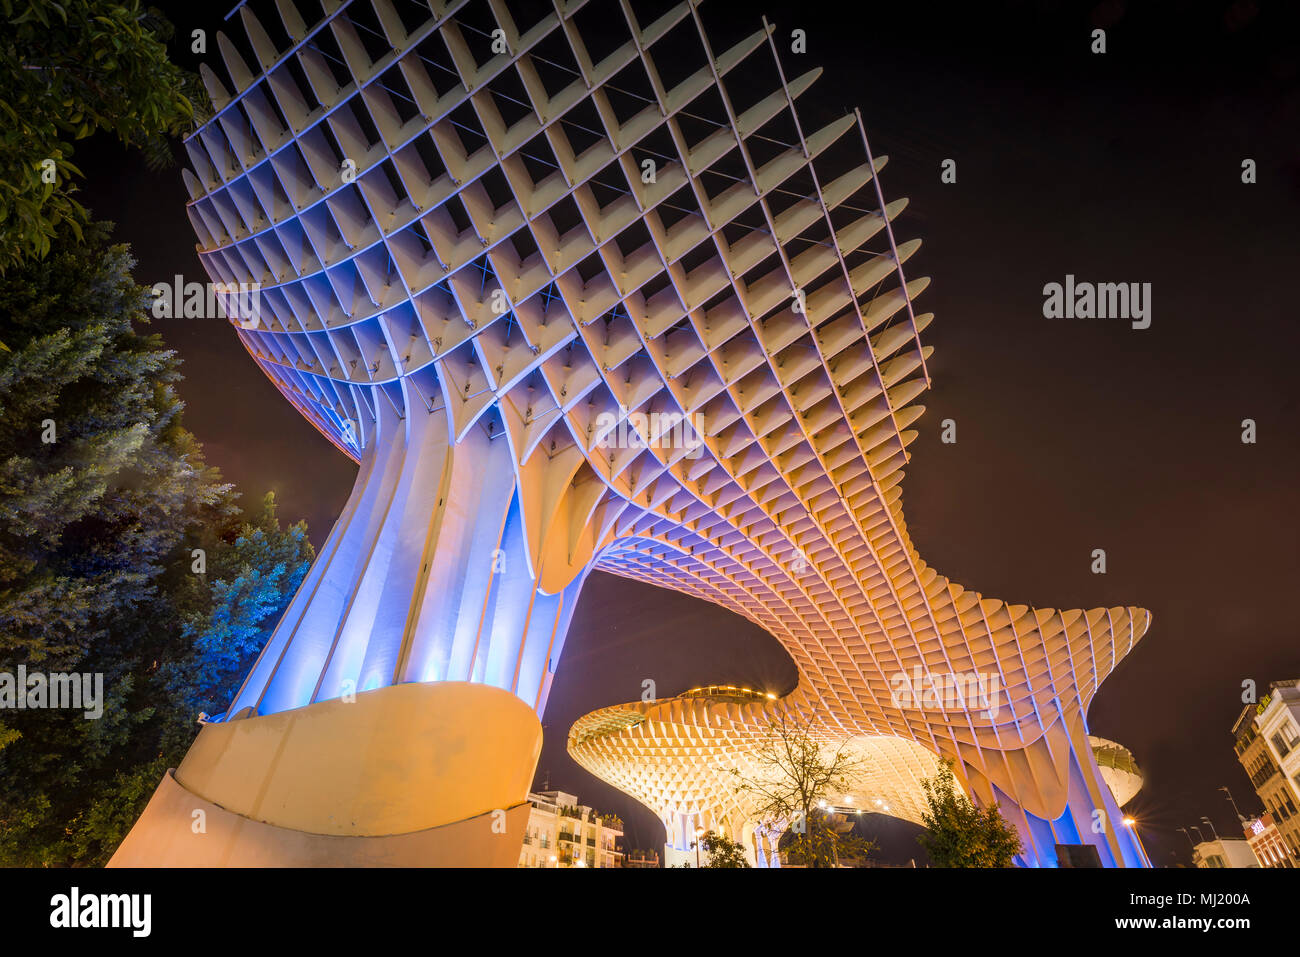 Moderne Architektur, Holz- struktur Metropol Parasol, bei Nacht beleuchtet, Plaza de la Encarnacion in Sevilla, Andalusien, Spanien Stockfoto